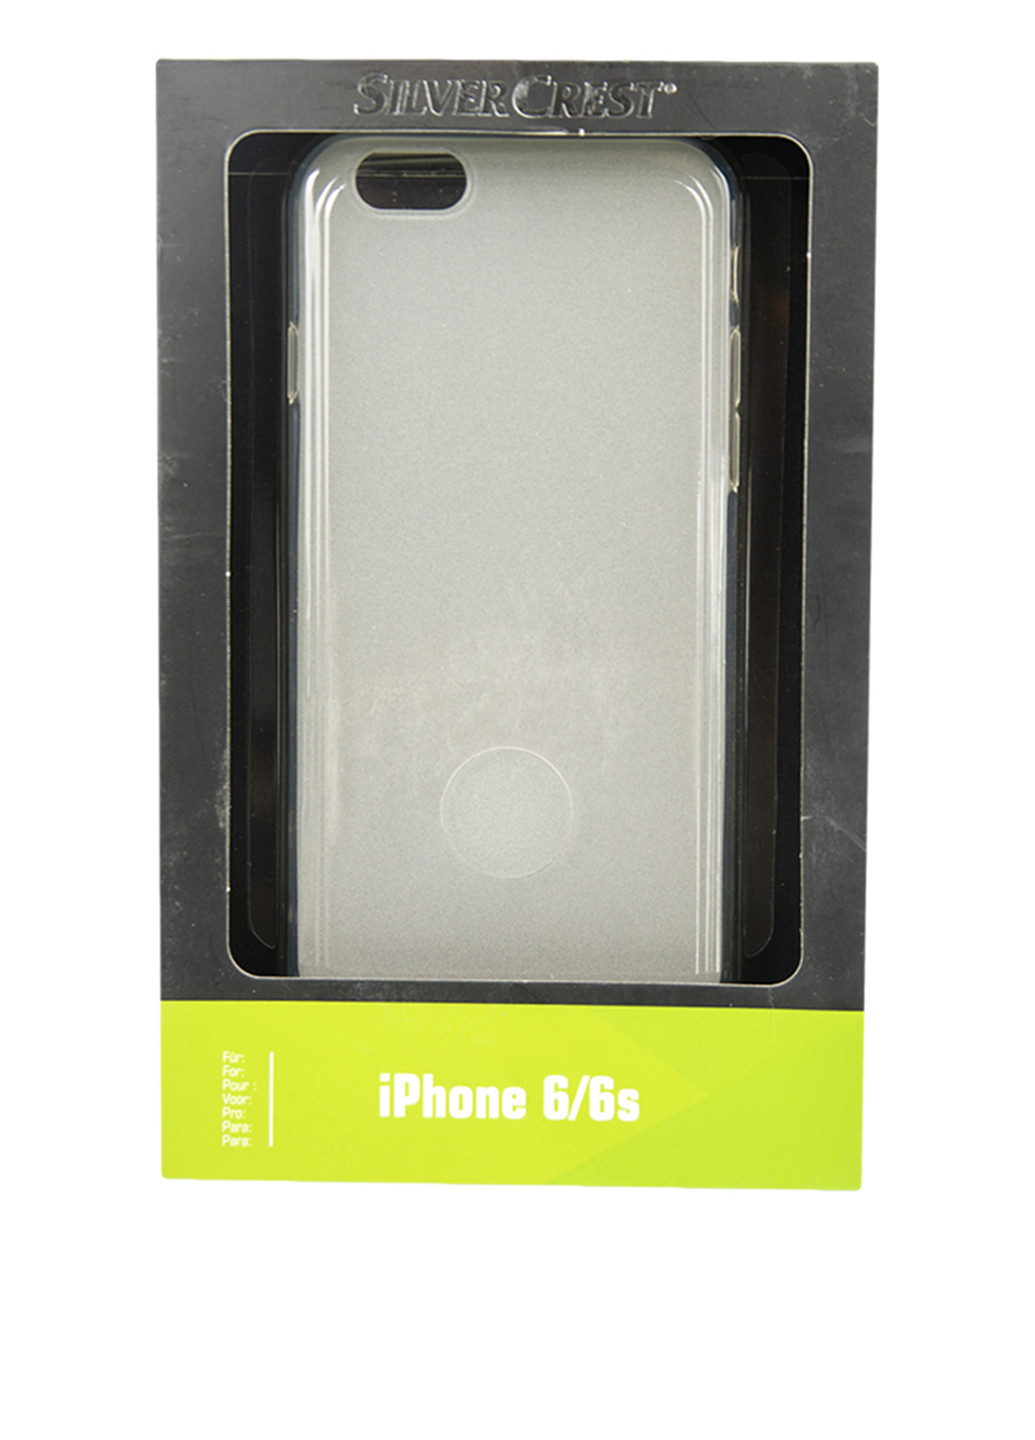 Чехол на iPhone 6/6S Silver Crest прозрачный